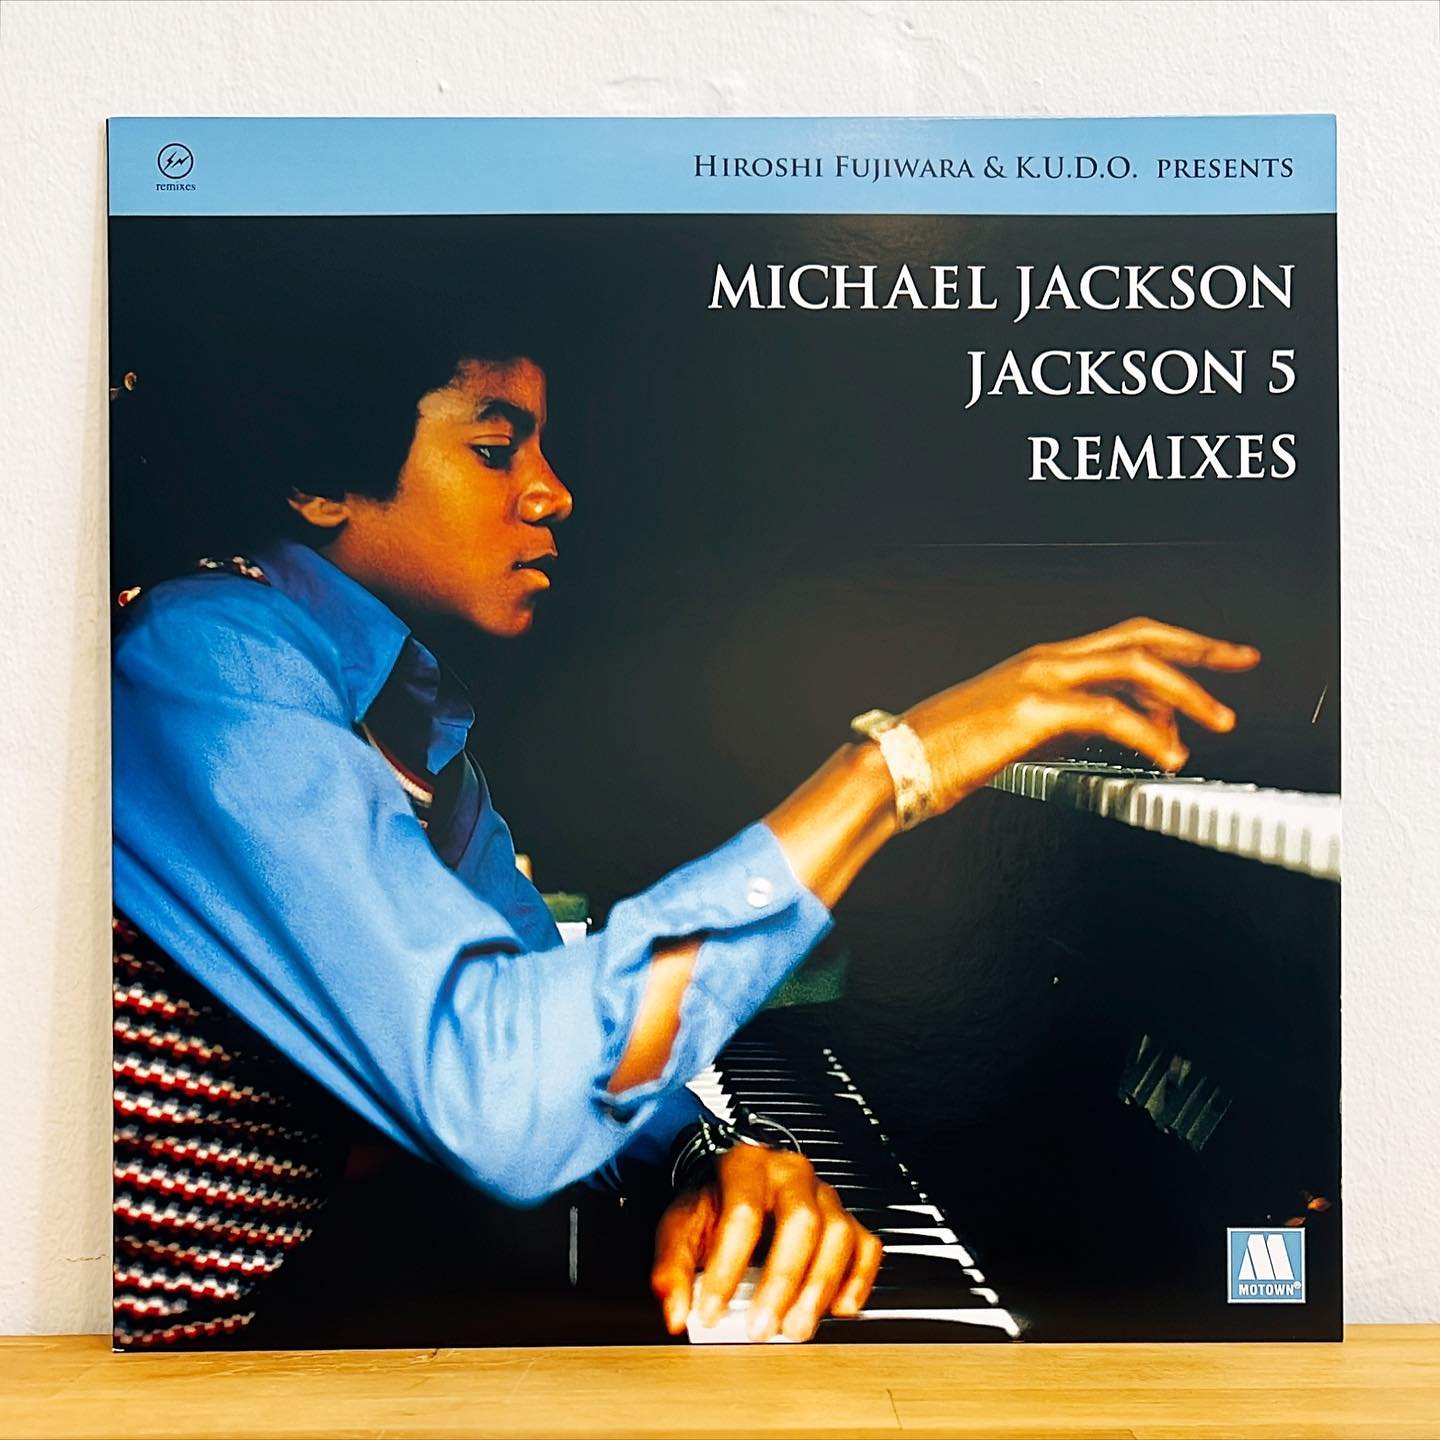 Hiroshi Fujiwara & K.U.D.O. Presents / Michael Jackson Jackson 5 Remixes